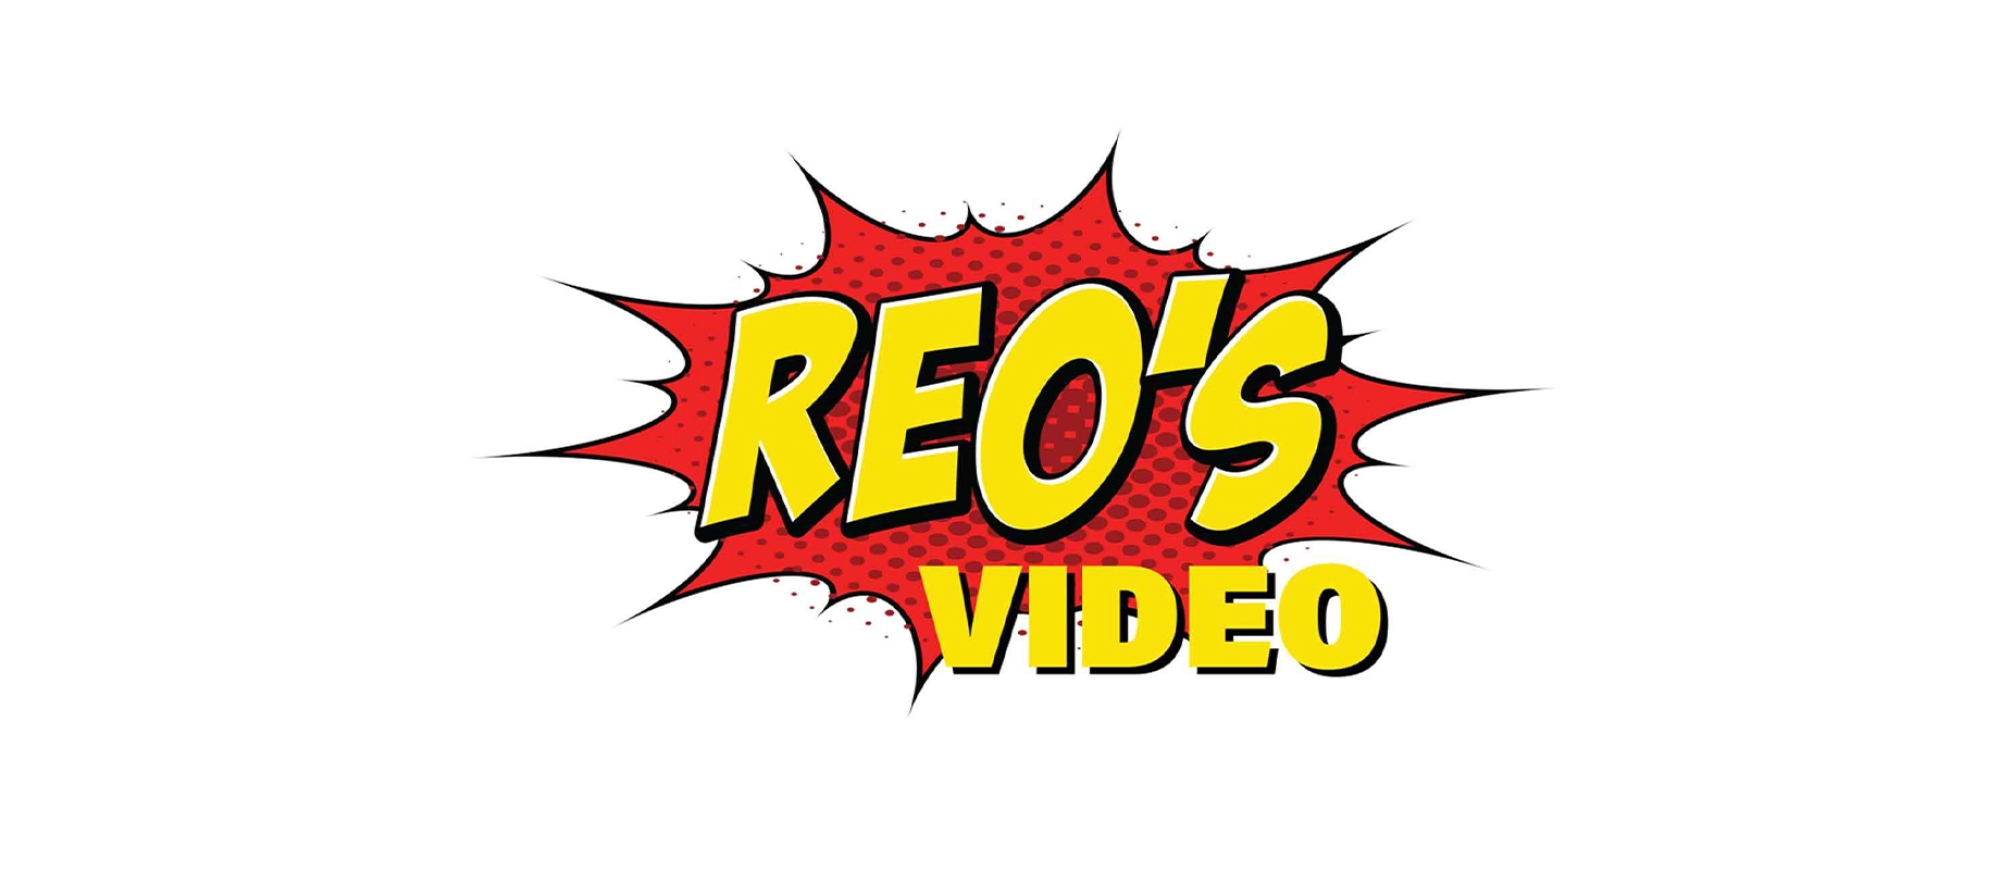 Reo's video logo